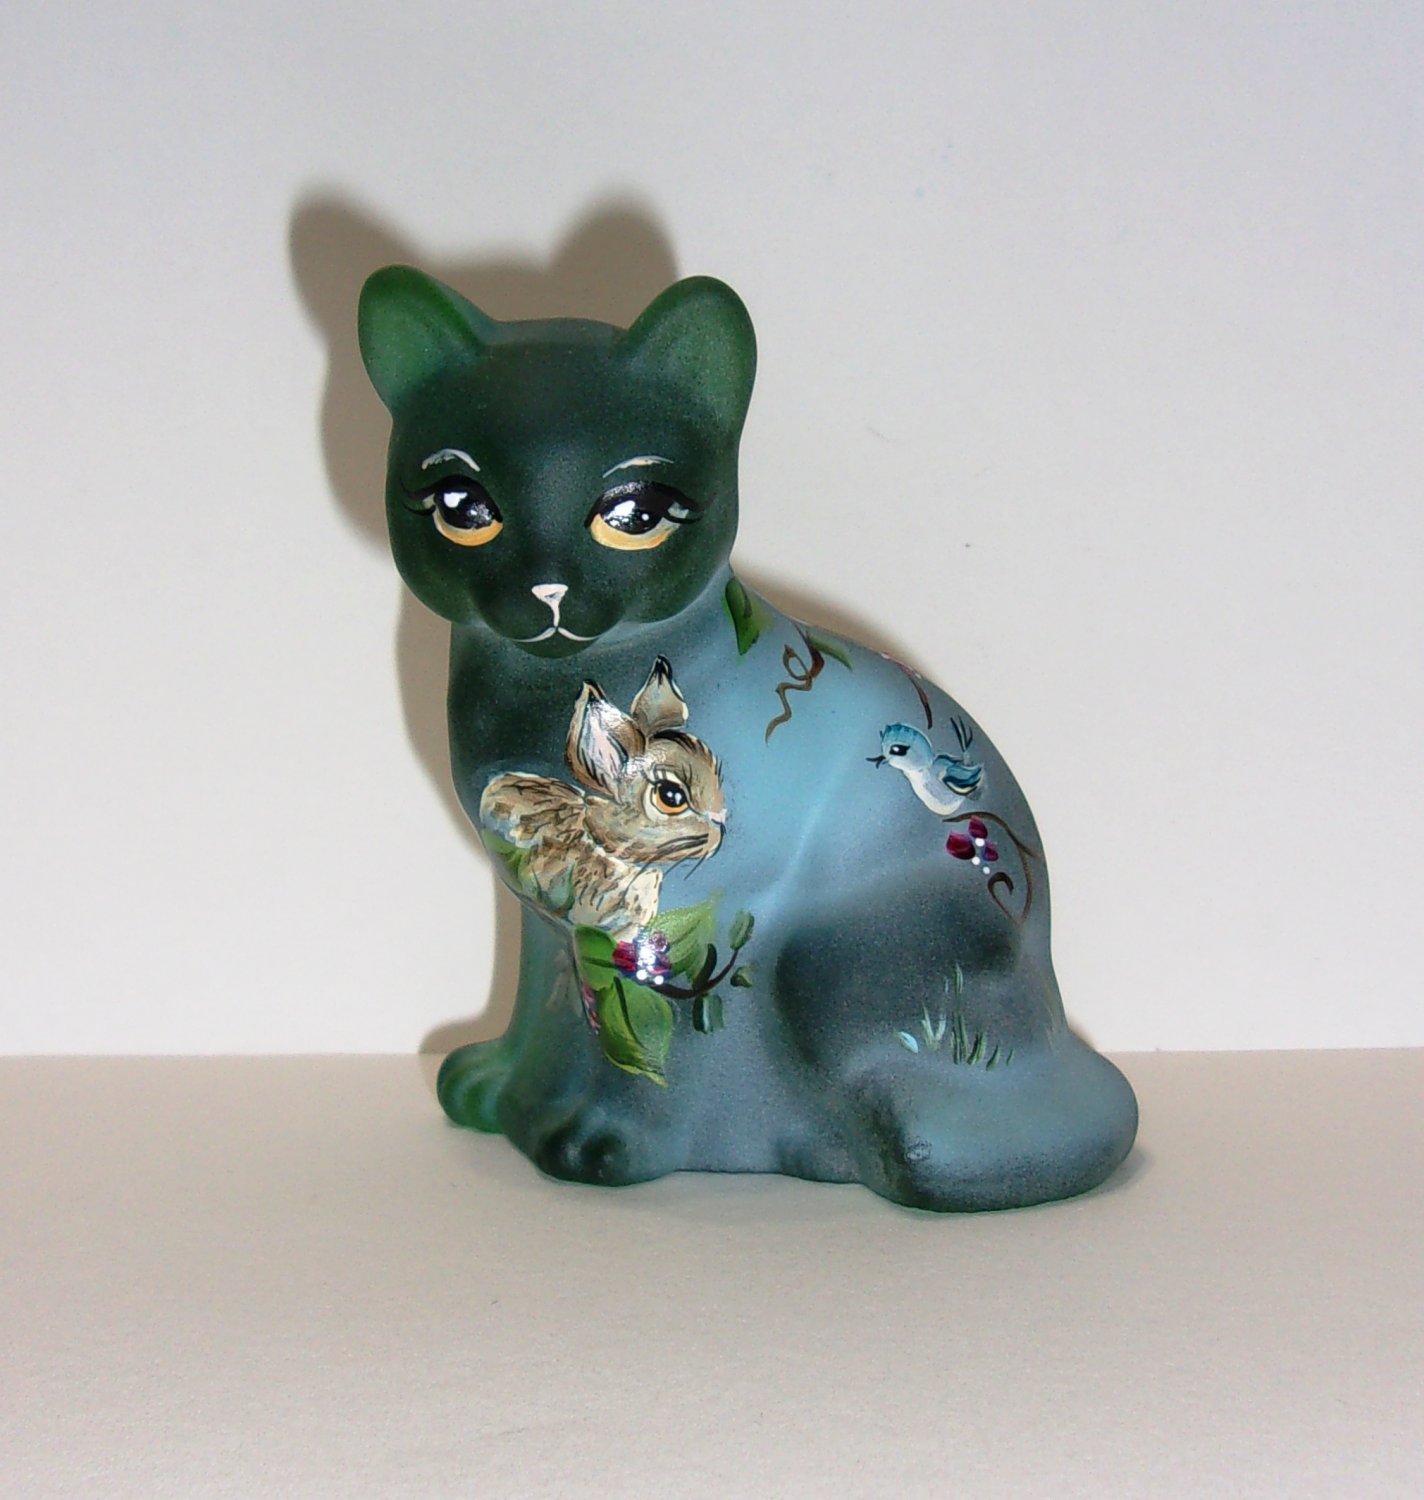 Fenton Glass Emerald Green Bunny Buddy Bluebird Sitting Cat Ltd Ed #1/31 Kibbe